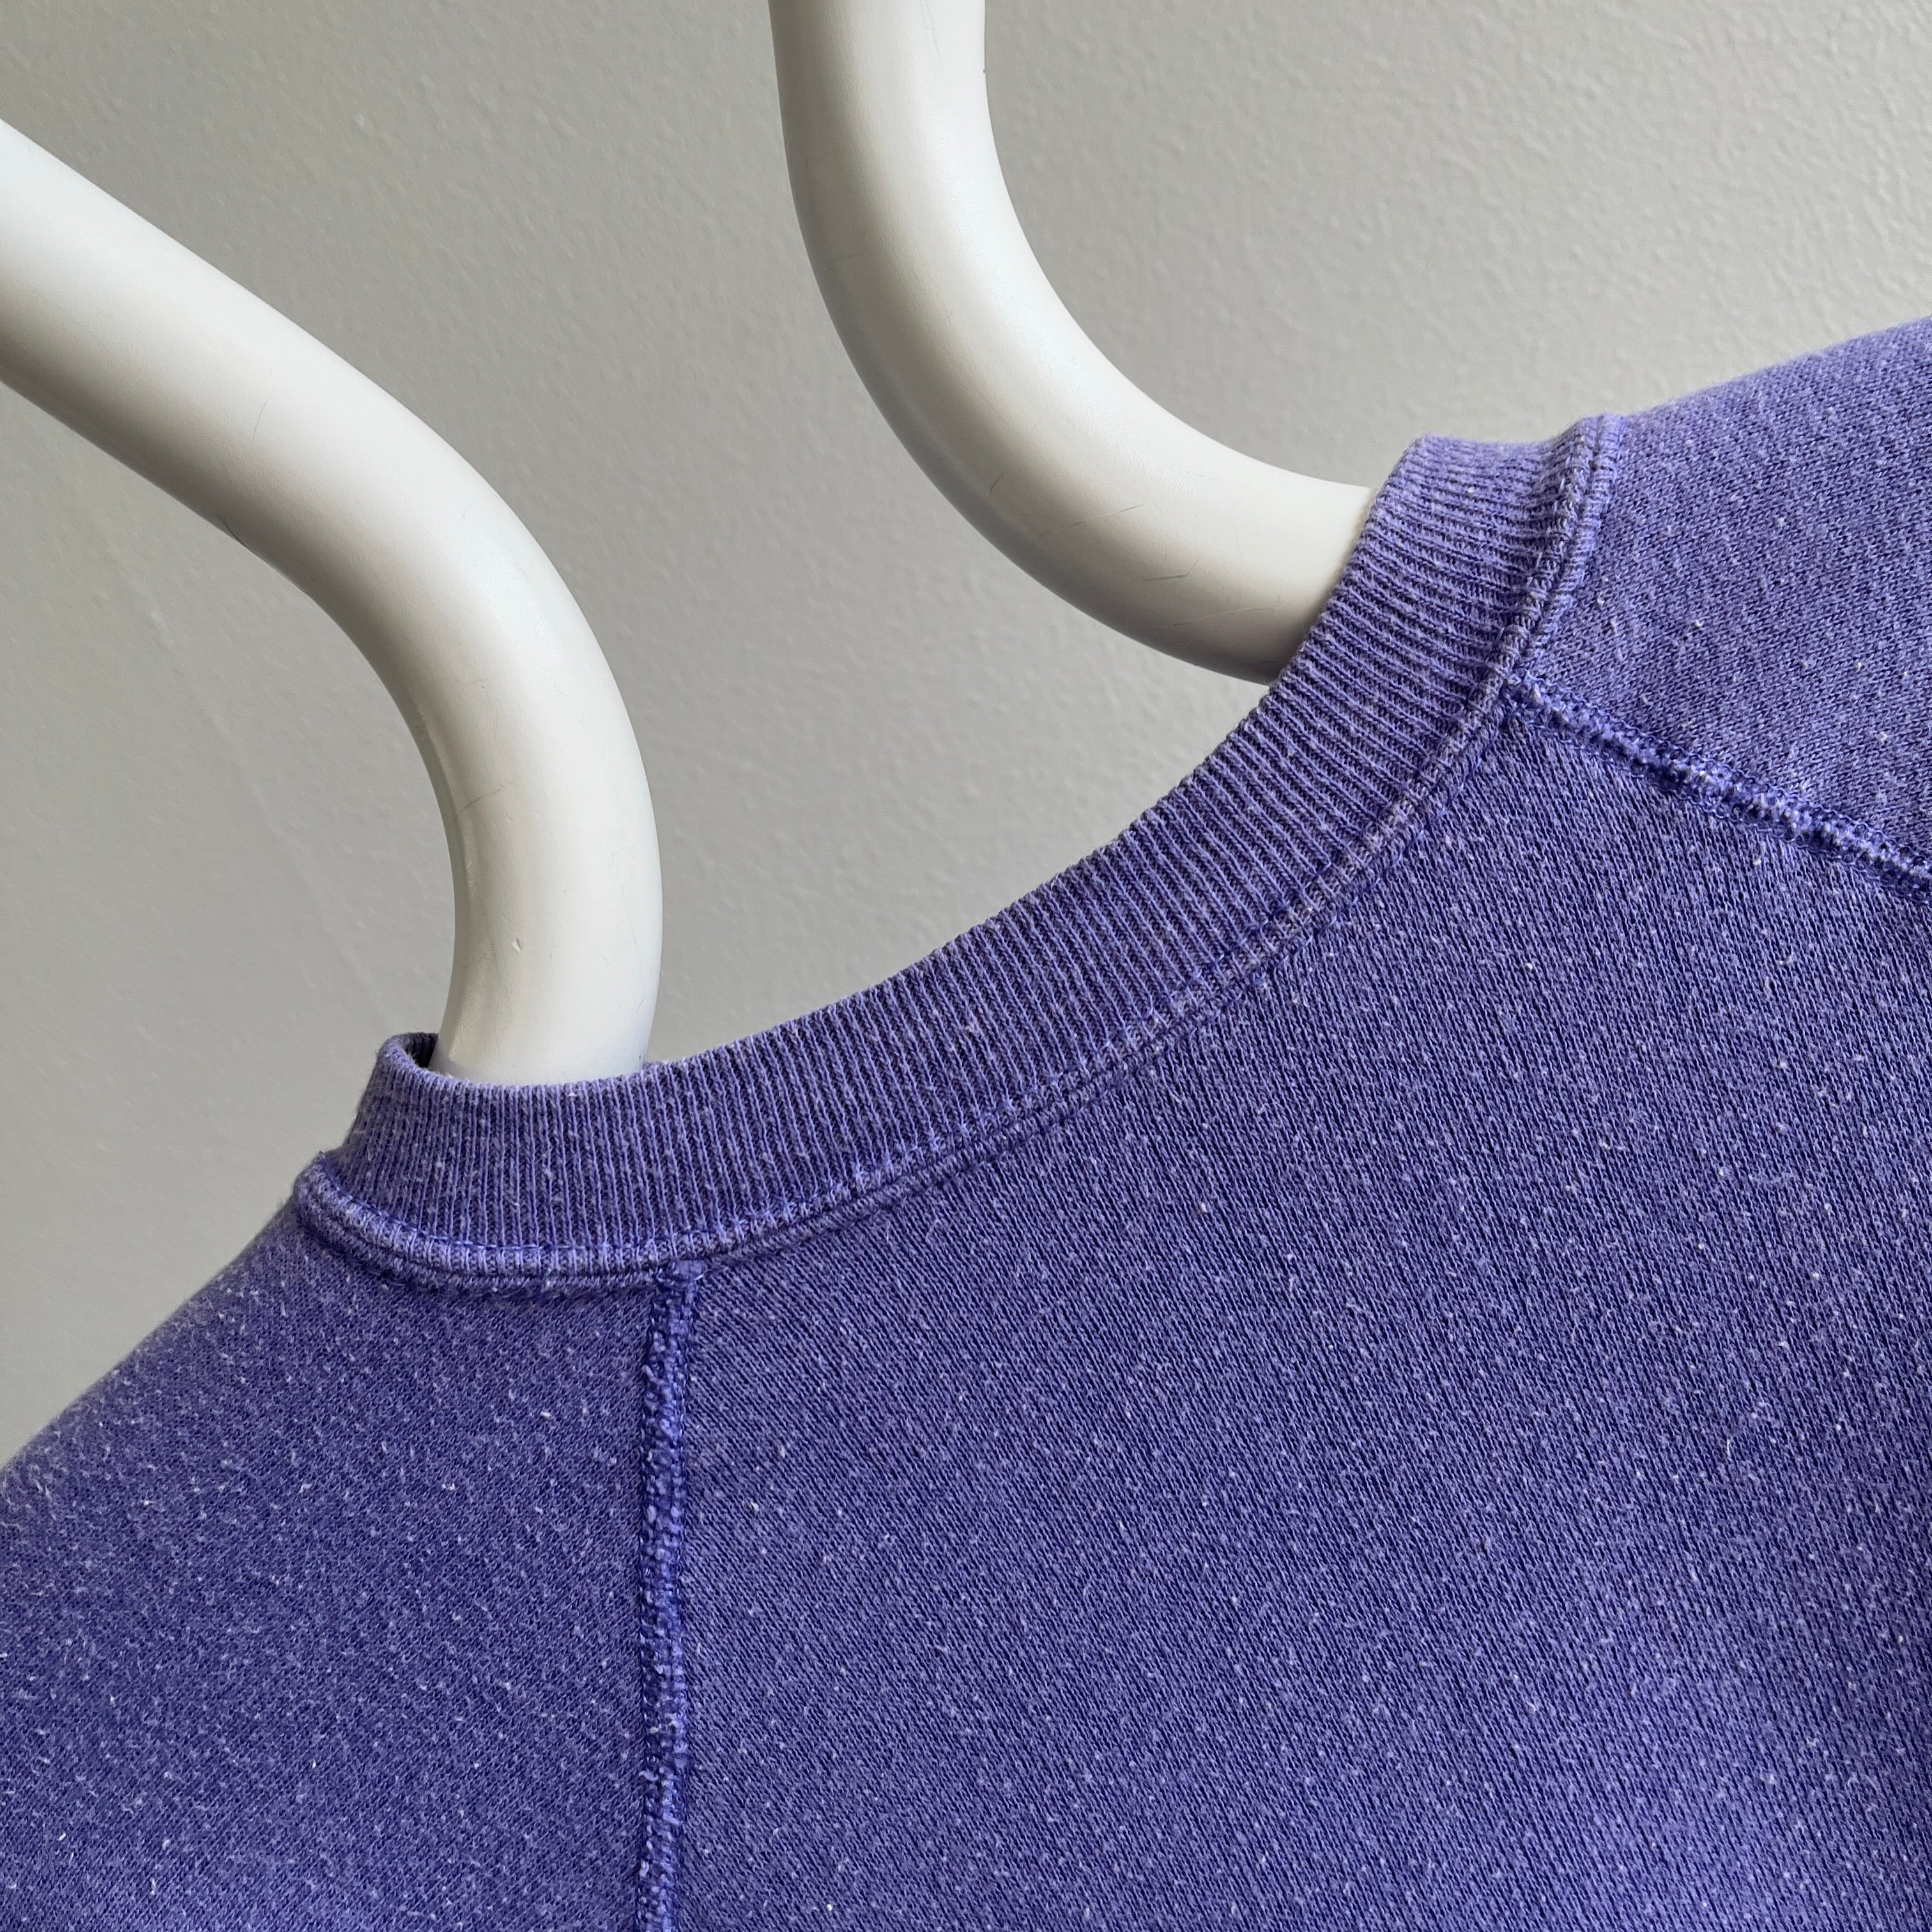 1980s Blank Lavender Smaller Sized Raglan Sweatshirt